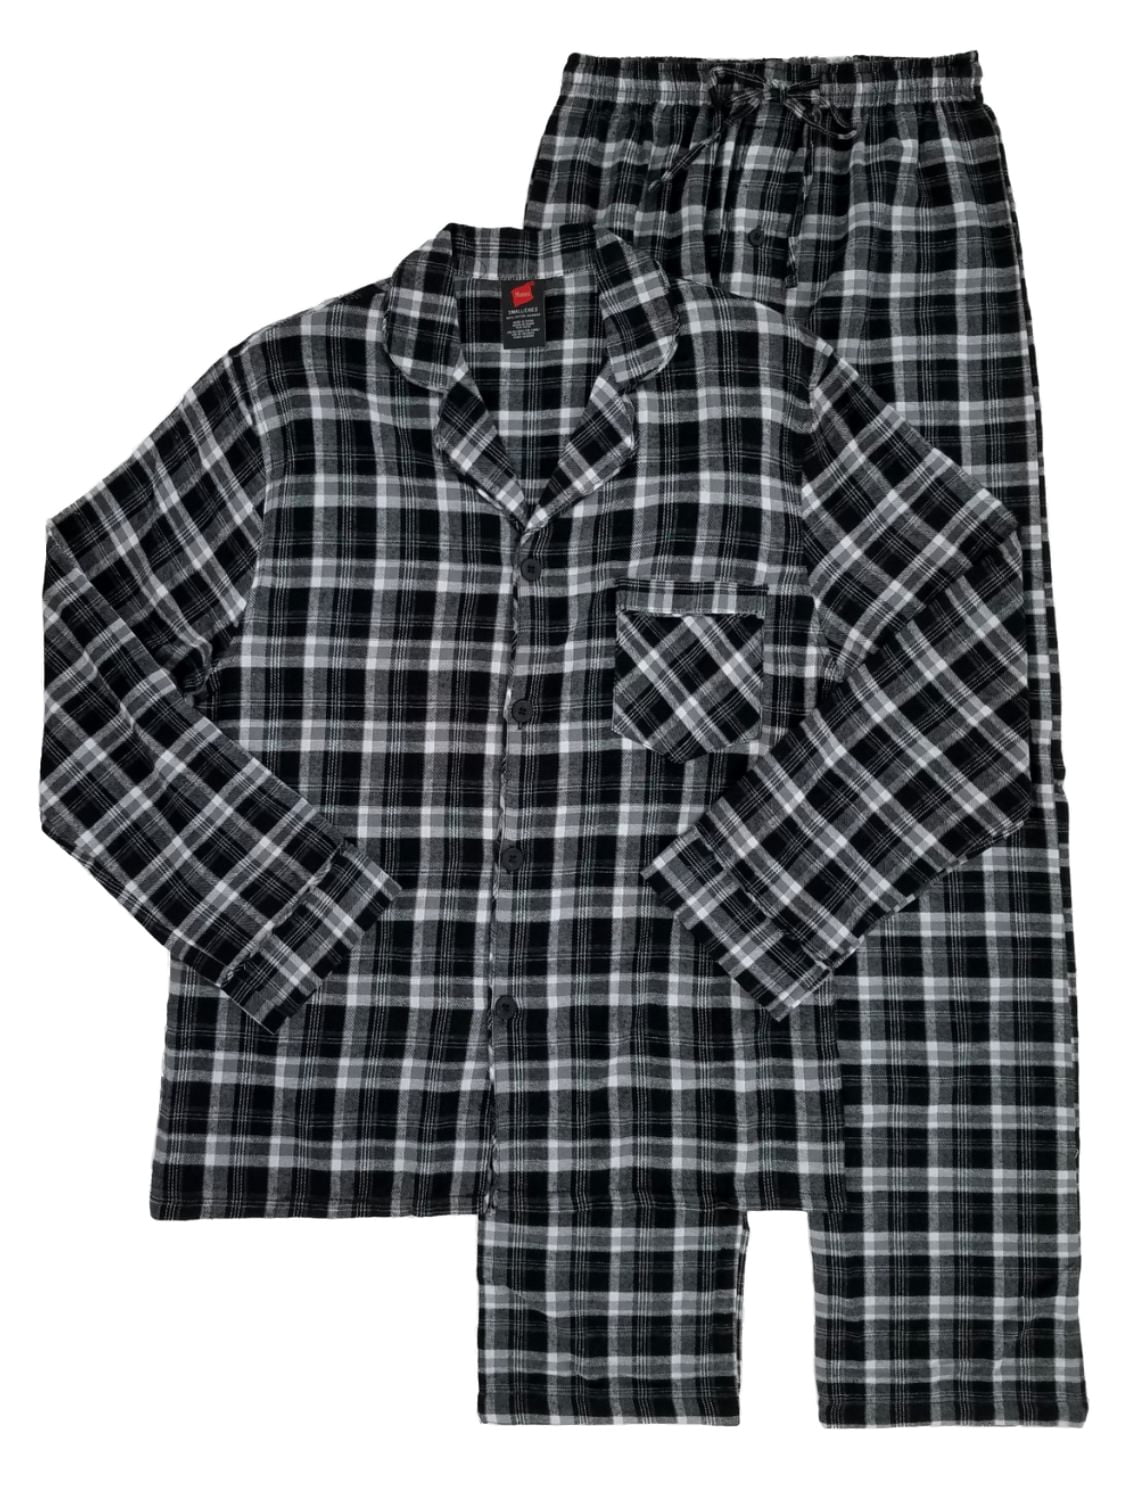 Hanes Men's 2pc Flannel Pajama Set Black Plaid 